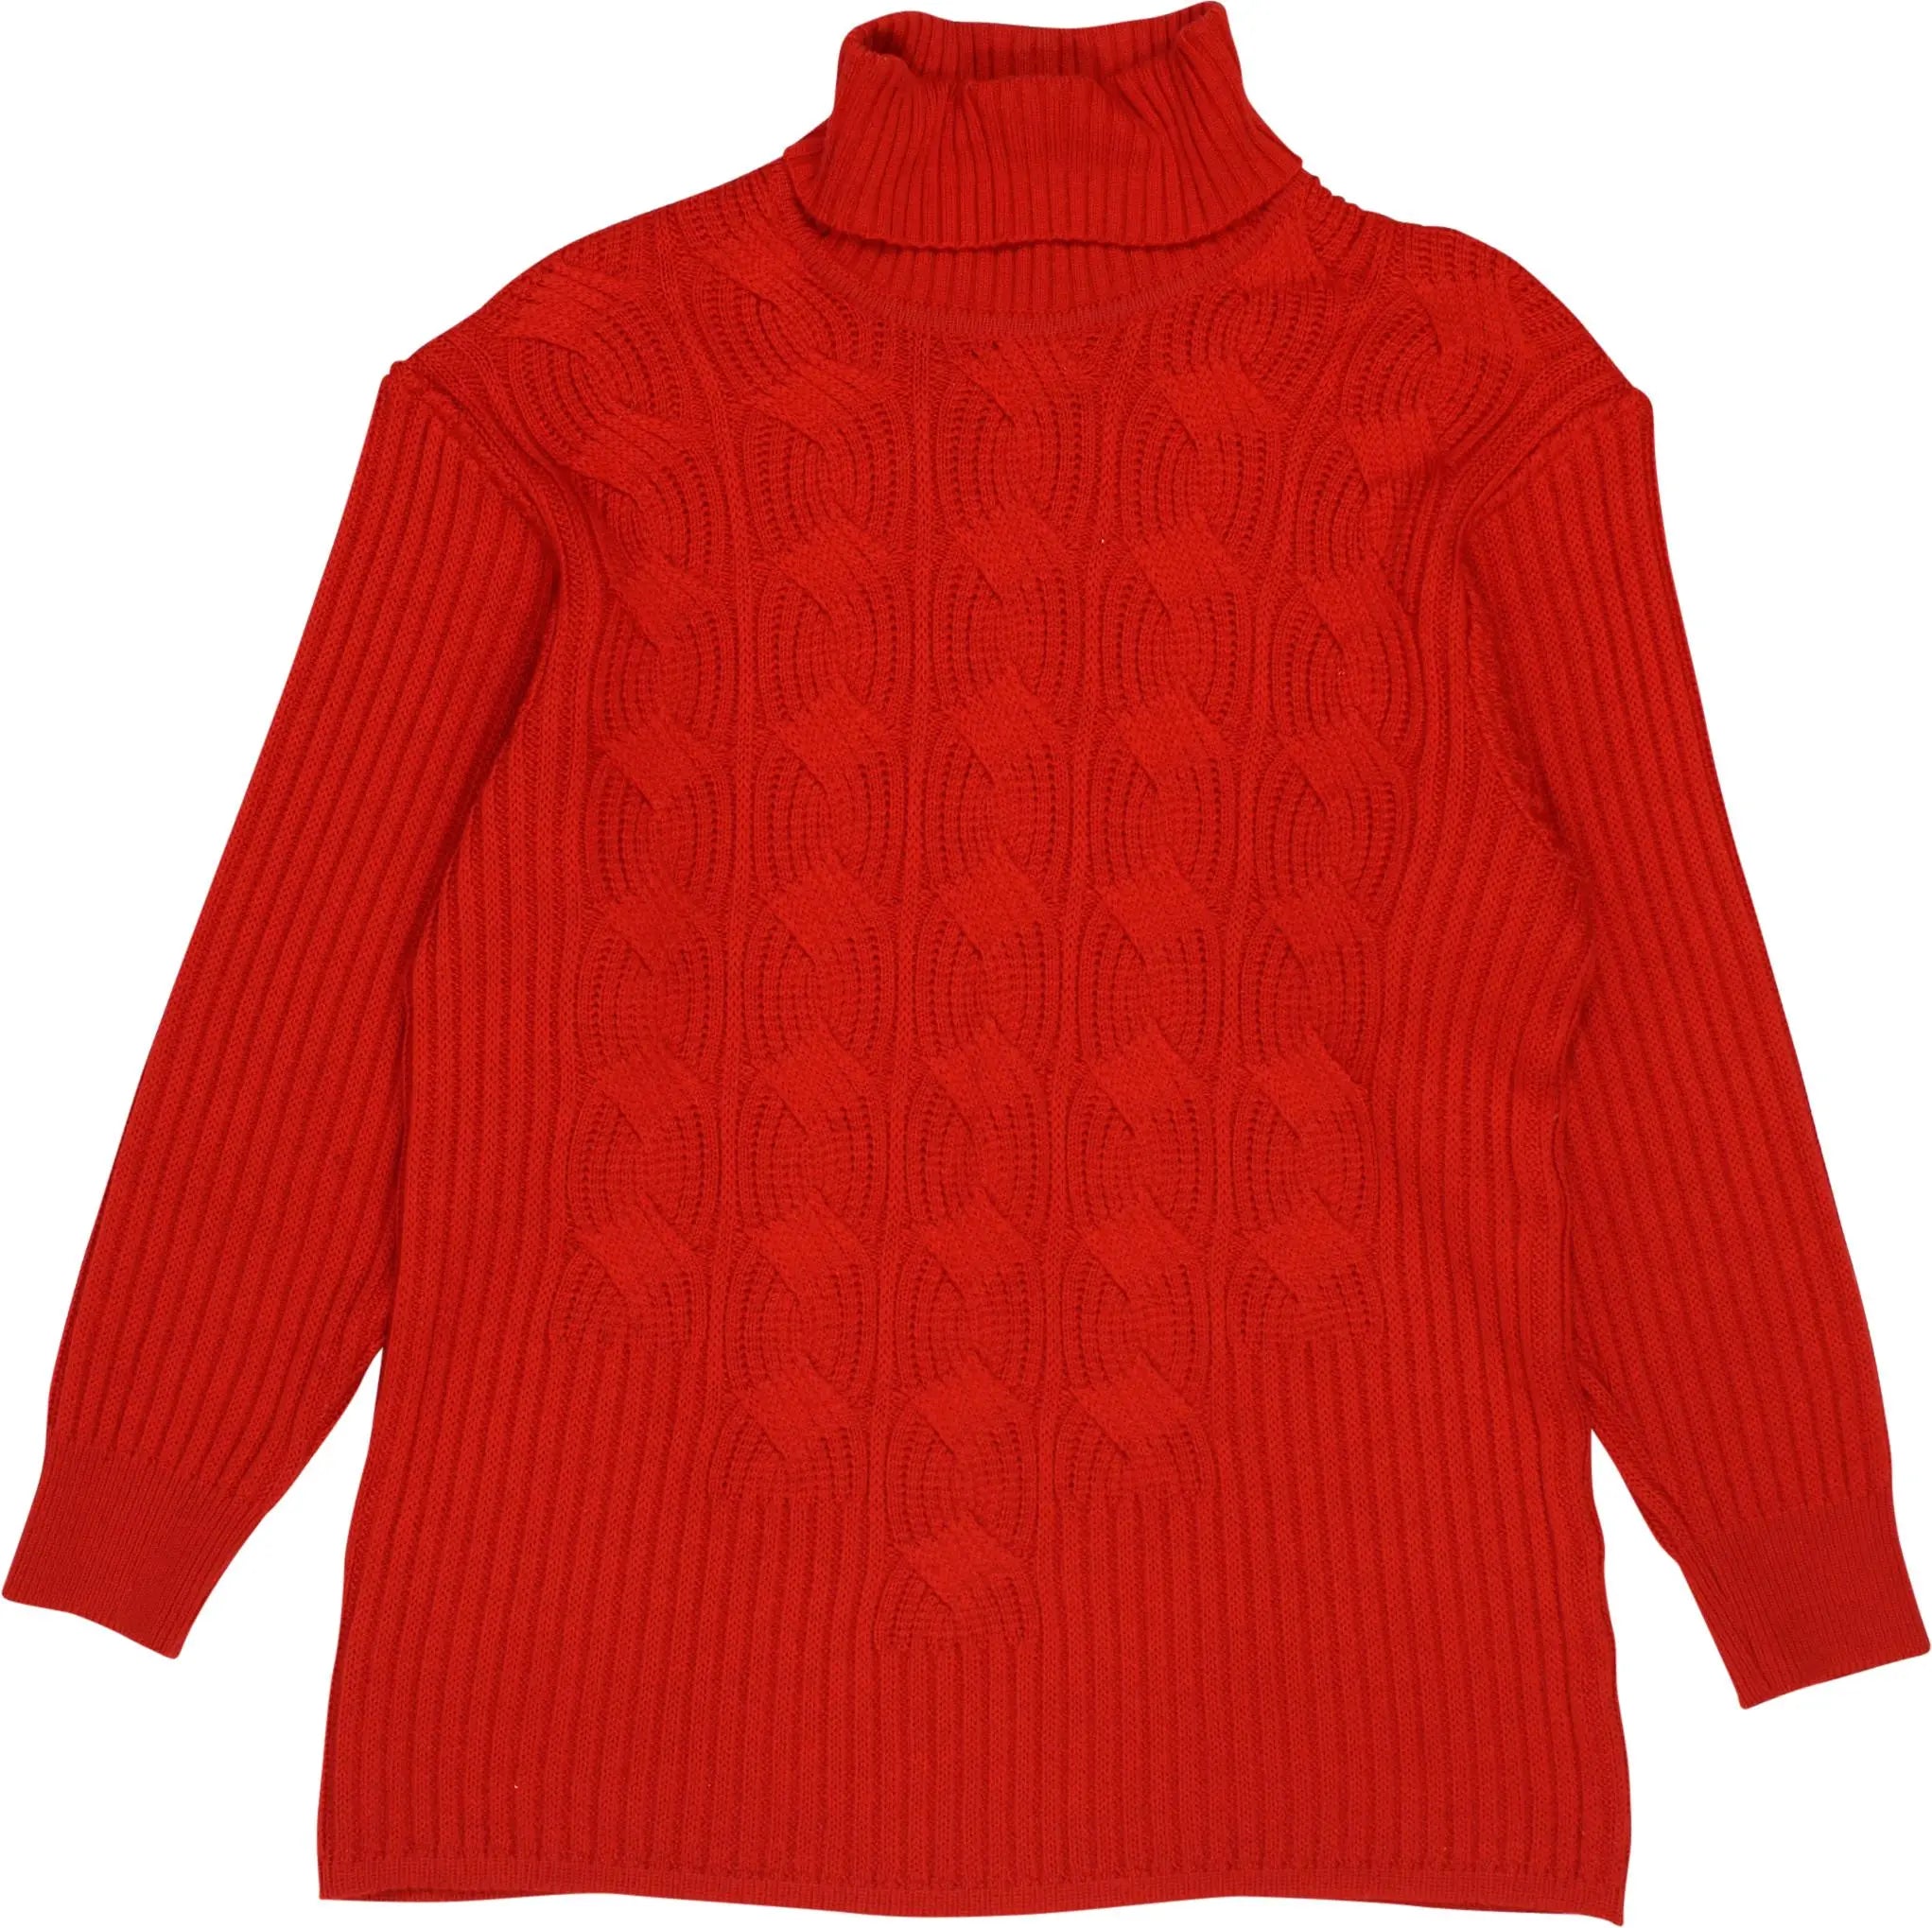 Erica Rössler - Red Knitted Jumper- ThriftTale.com - Vintage and second handclothing